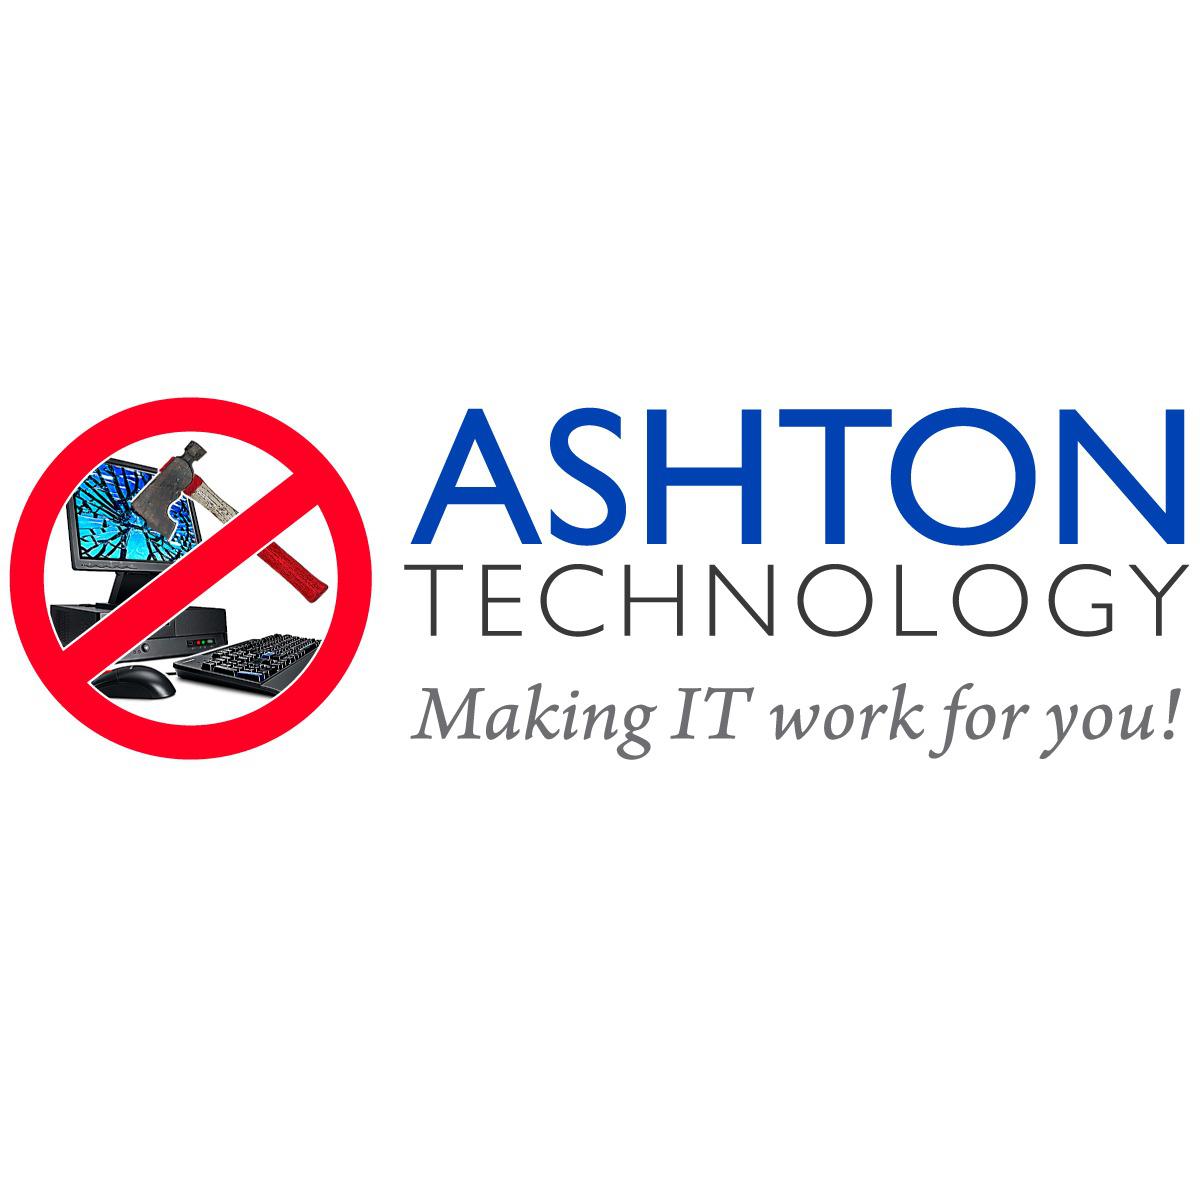 Ashton Technology - Woodvale, WA 6026 - 0433 102 277 | ShowMeLocal.com